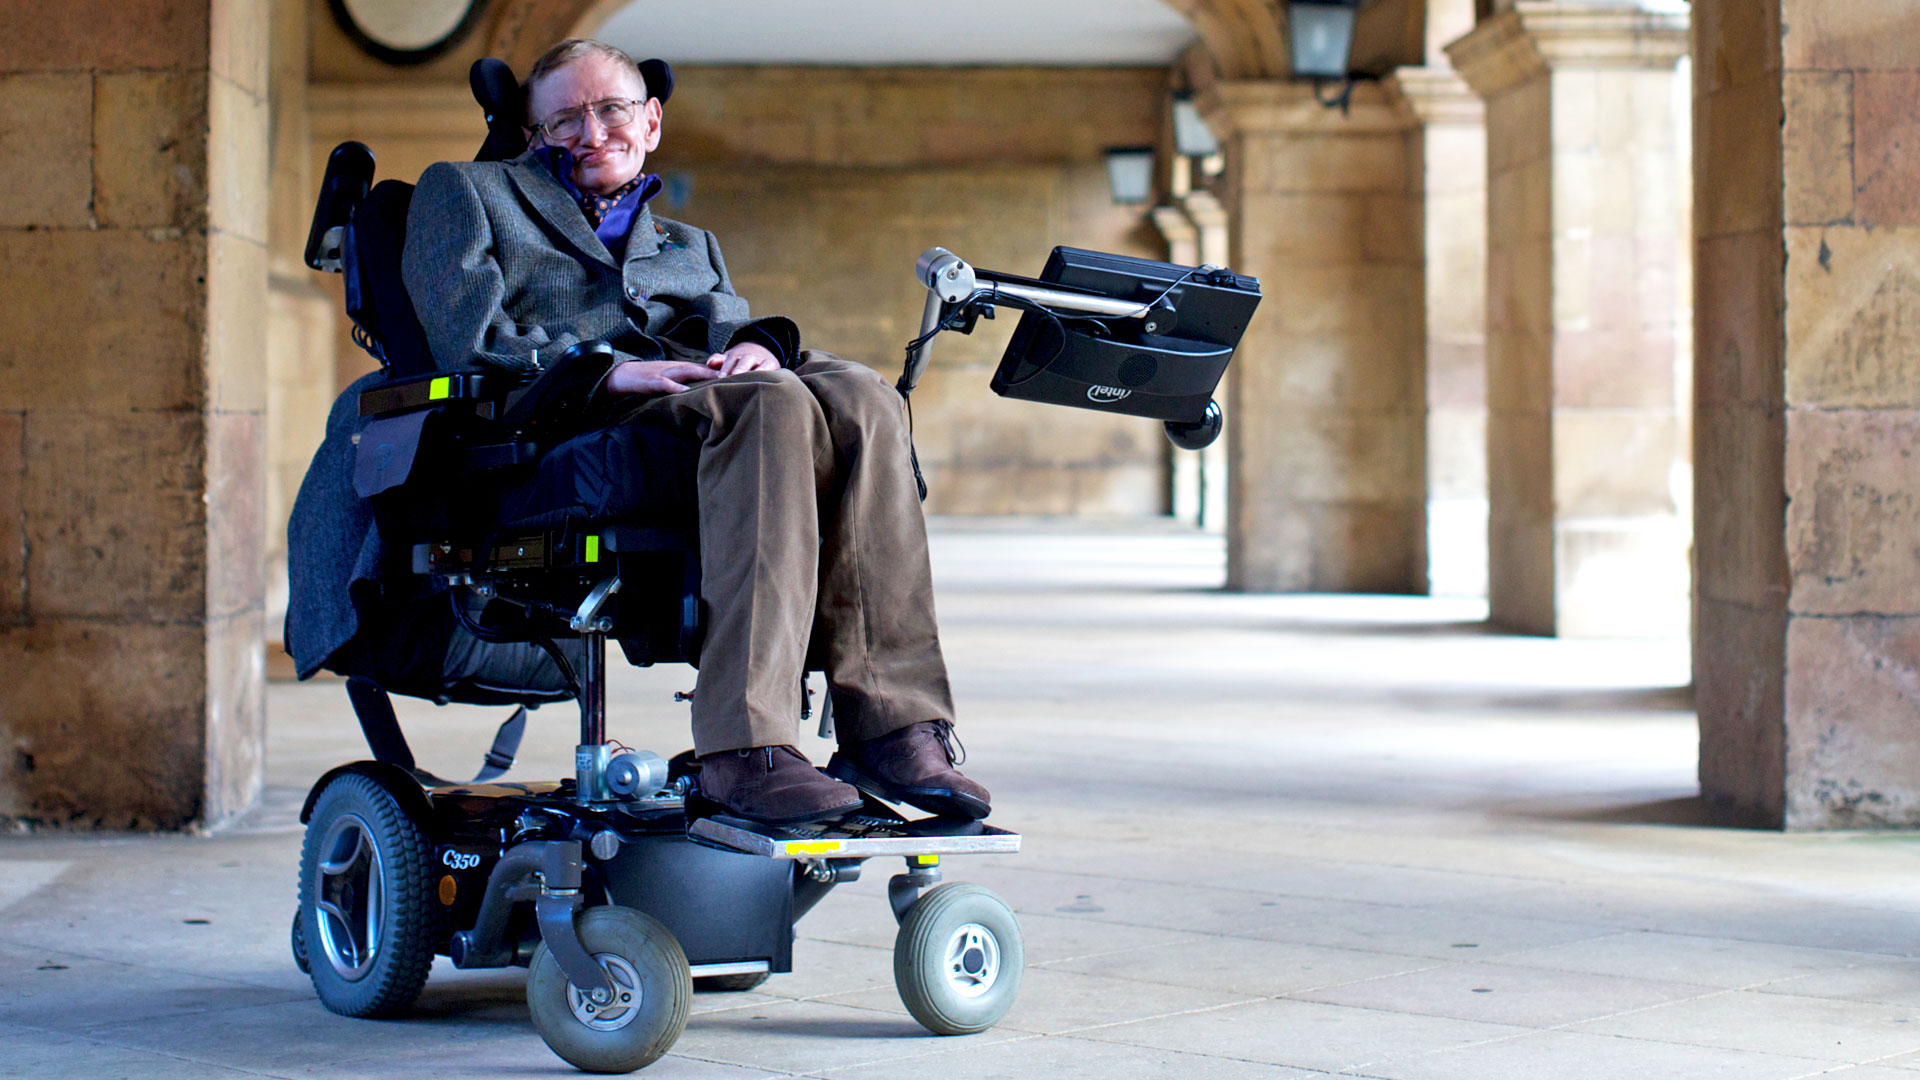 Hawking: Did he change views on disability? - BBC News